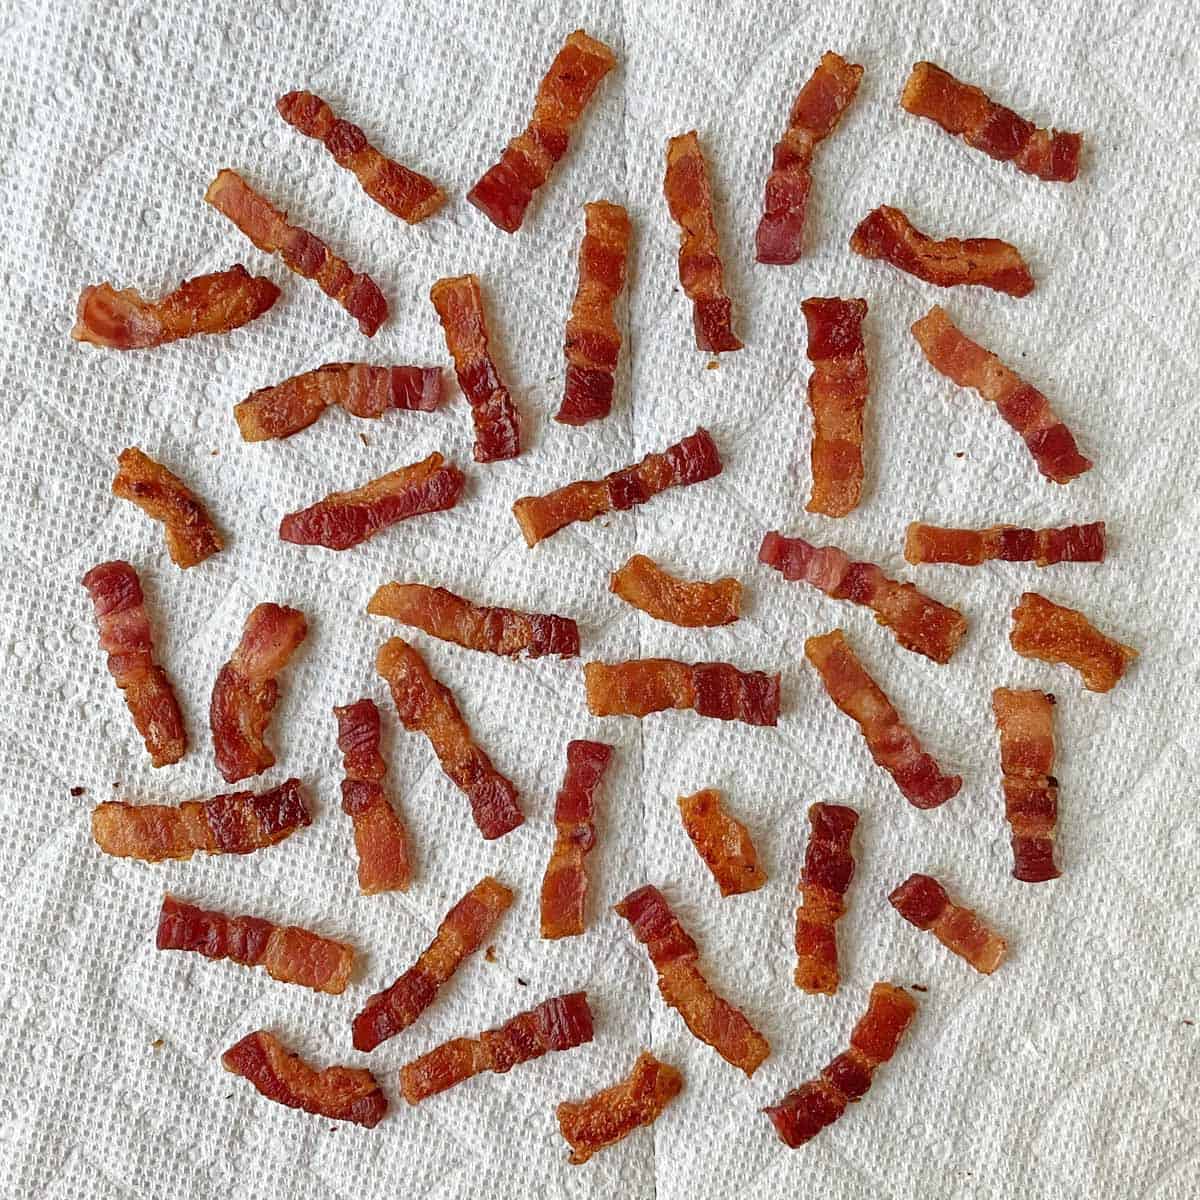 Several dozen cooked bacon lardons draining on a paper towel.